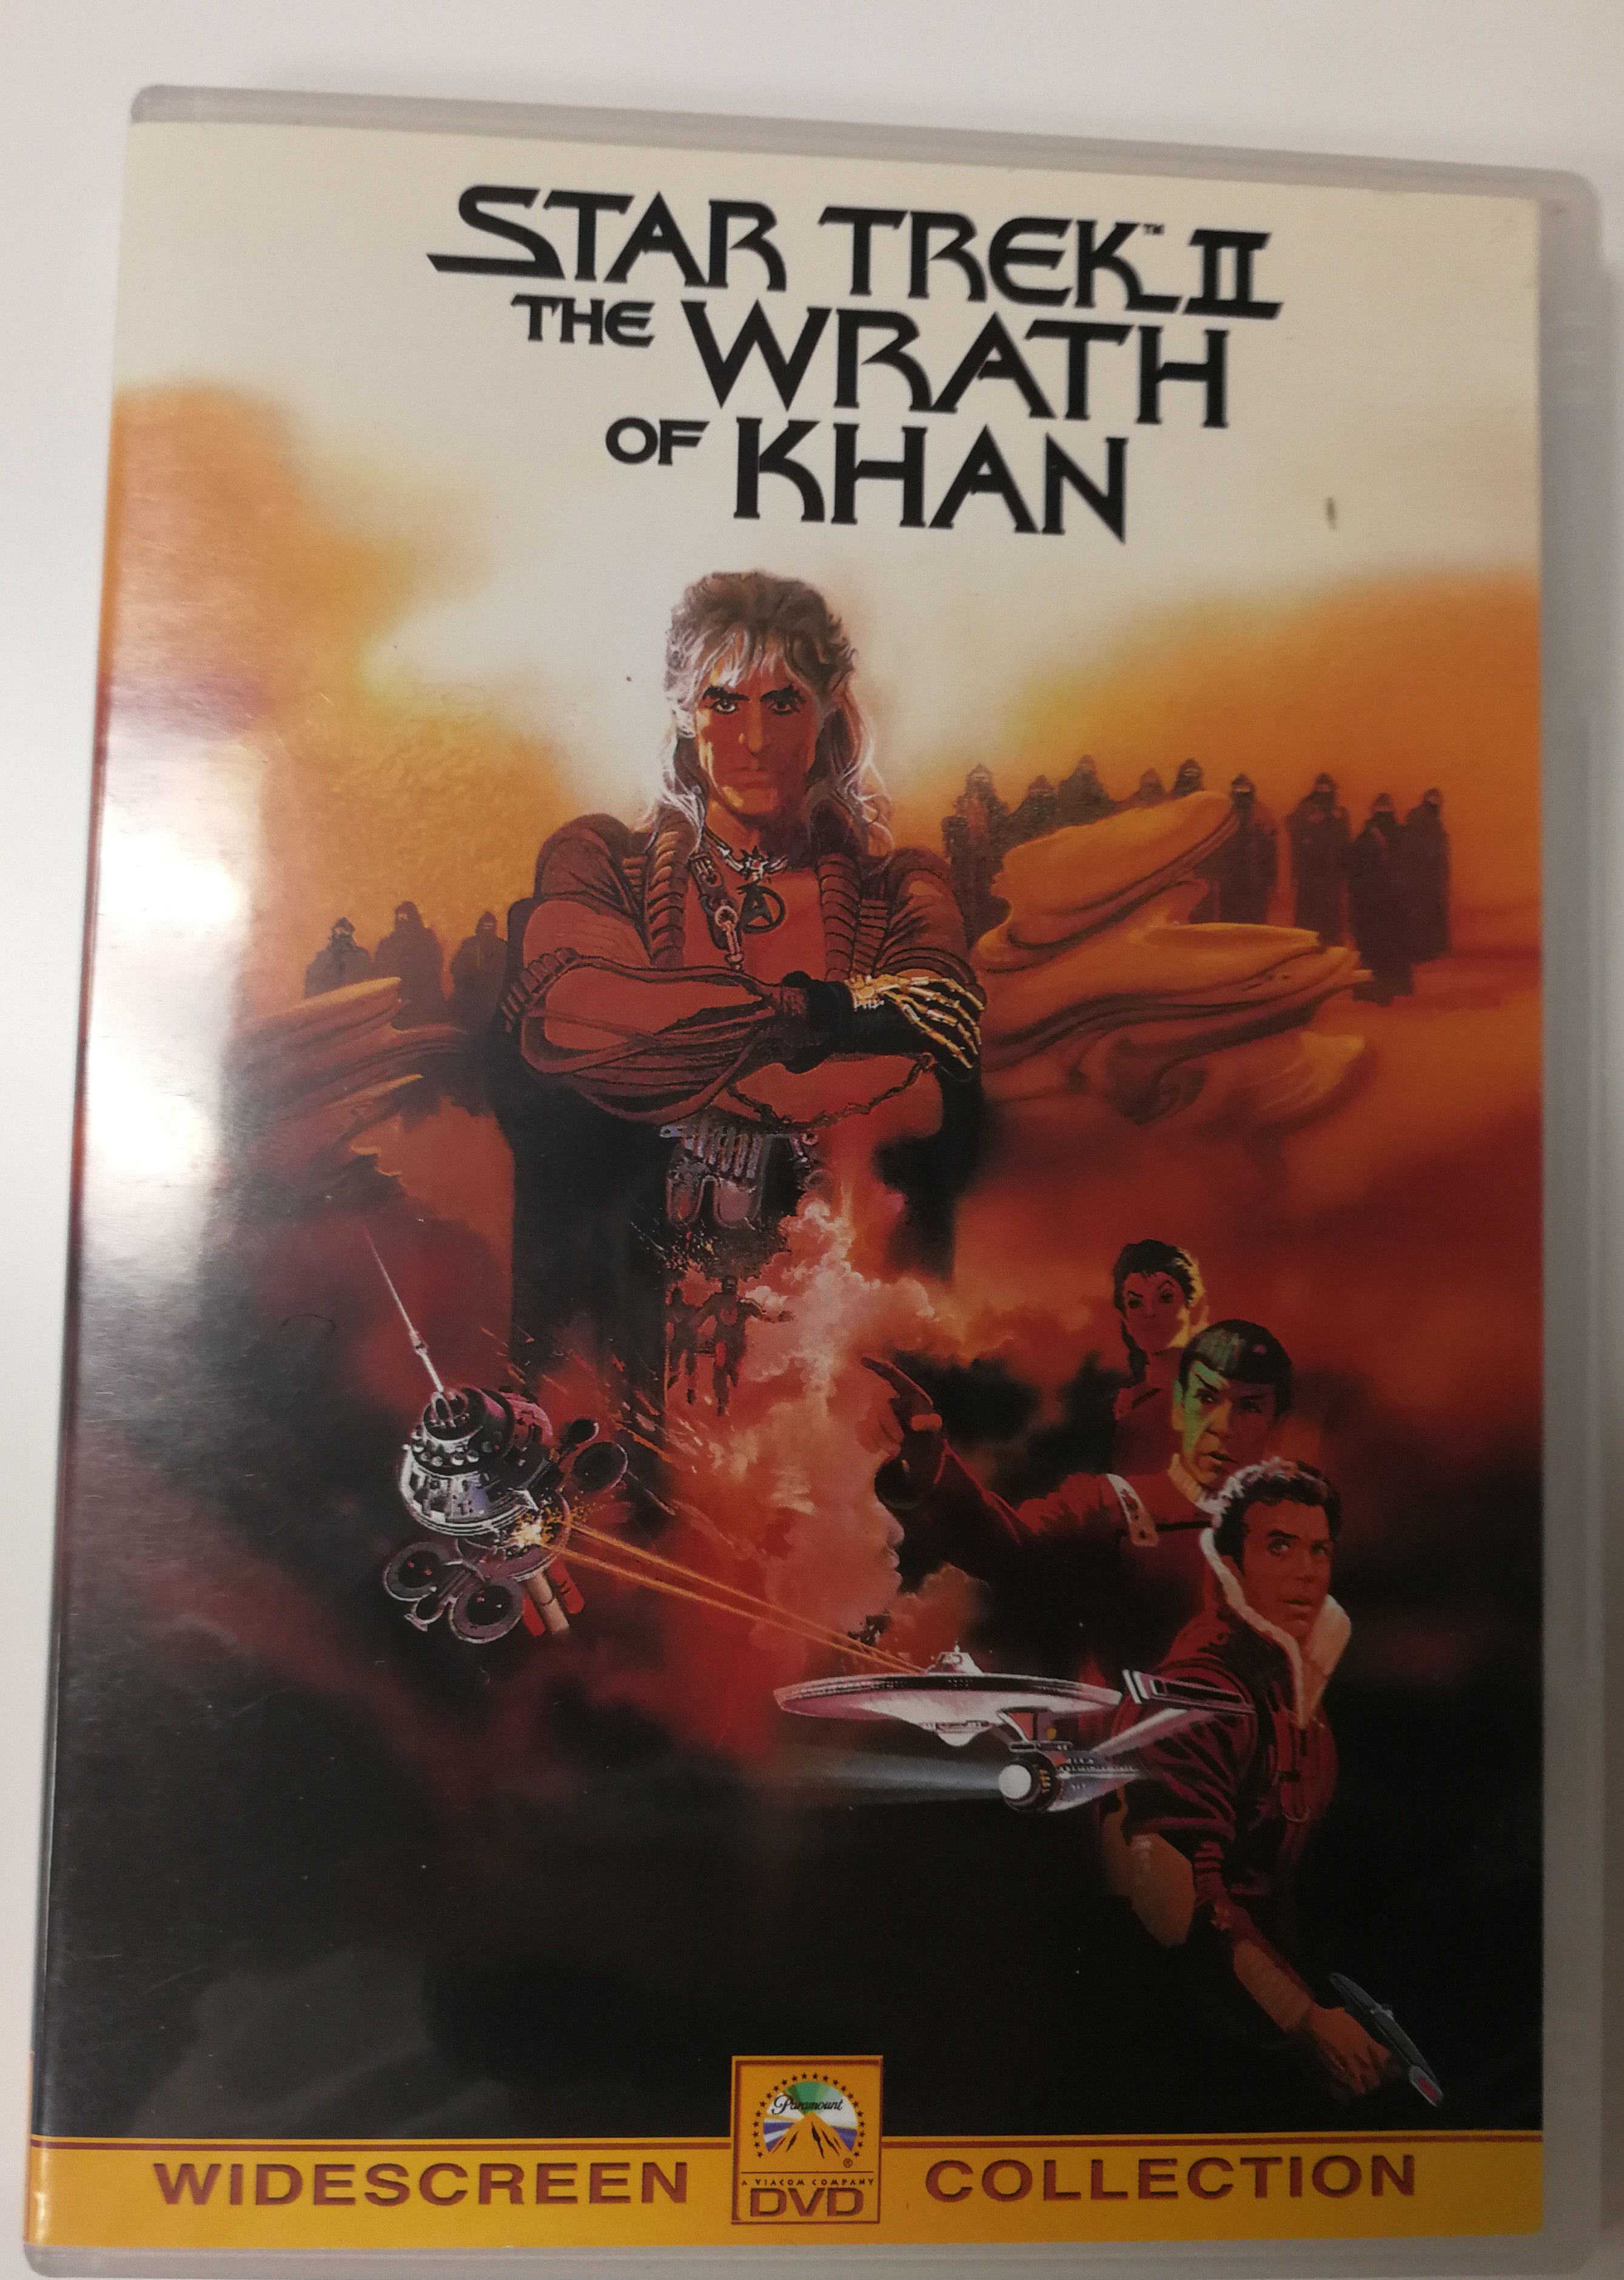  Star Trek II The wrath of khan DVD 1982 1